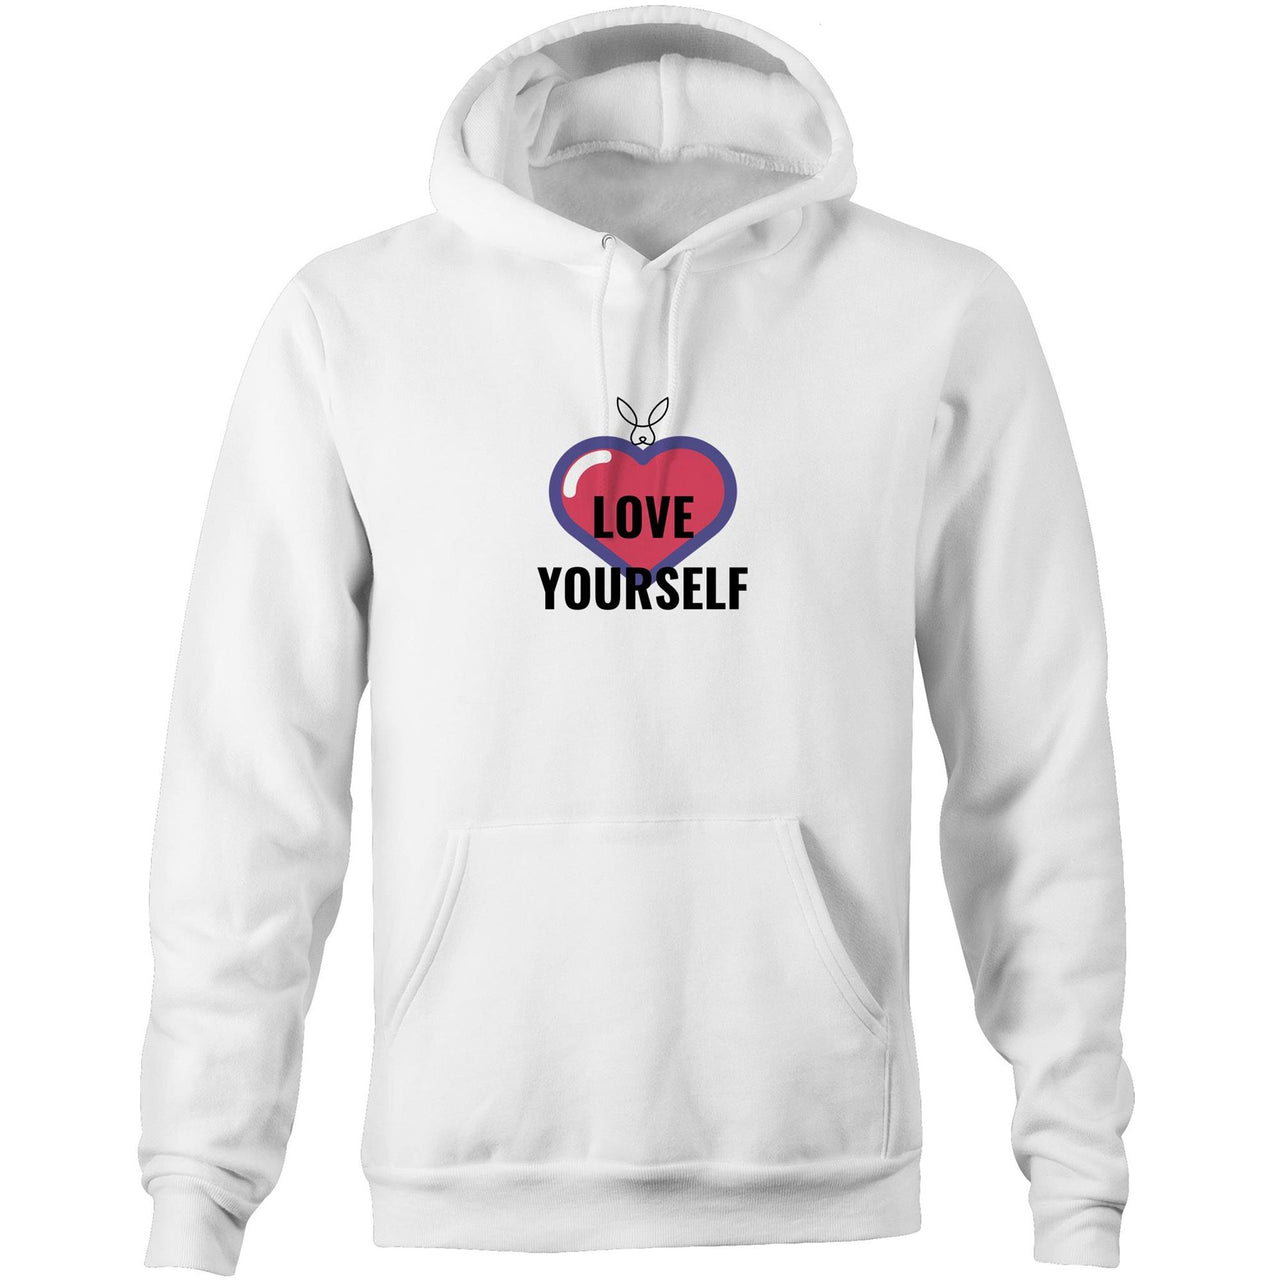 Love Yourself Pocket Hoodie Sweatshirt. unisex mens womens white